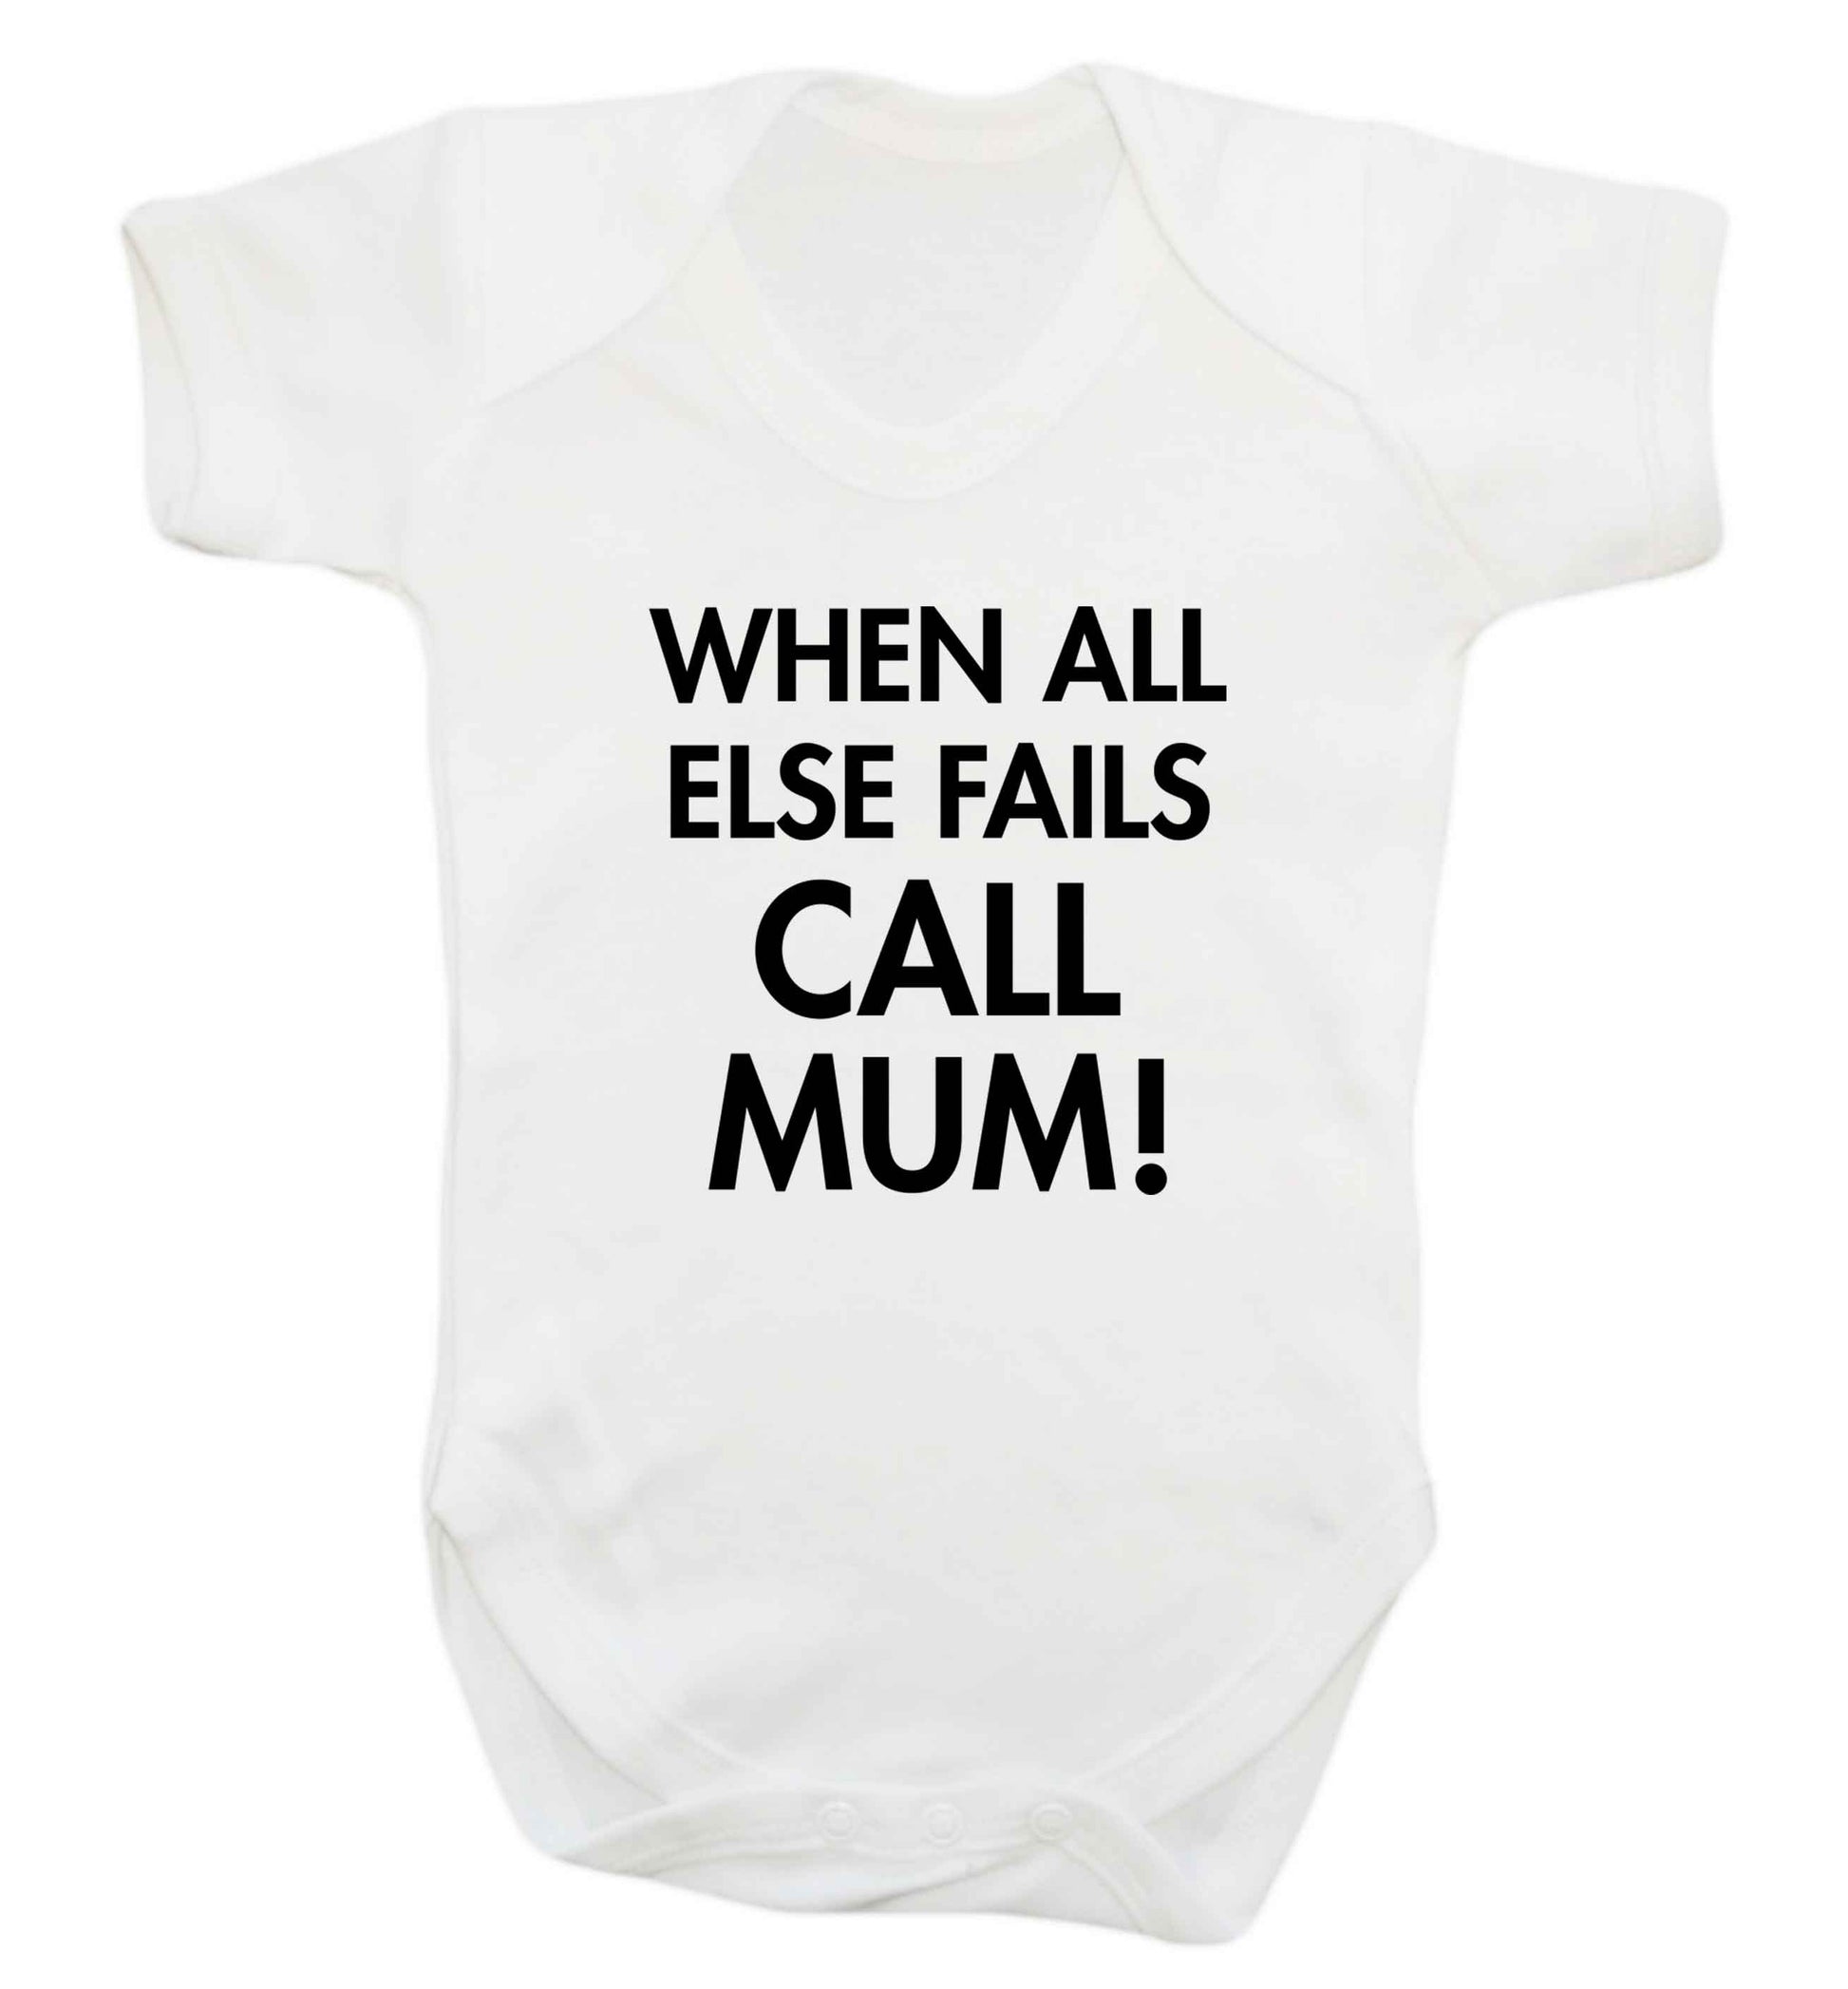 When all else fails call mum! baby vest white 18-24 months